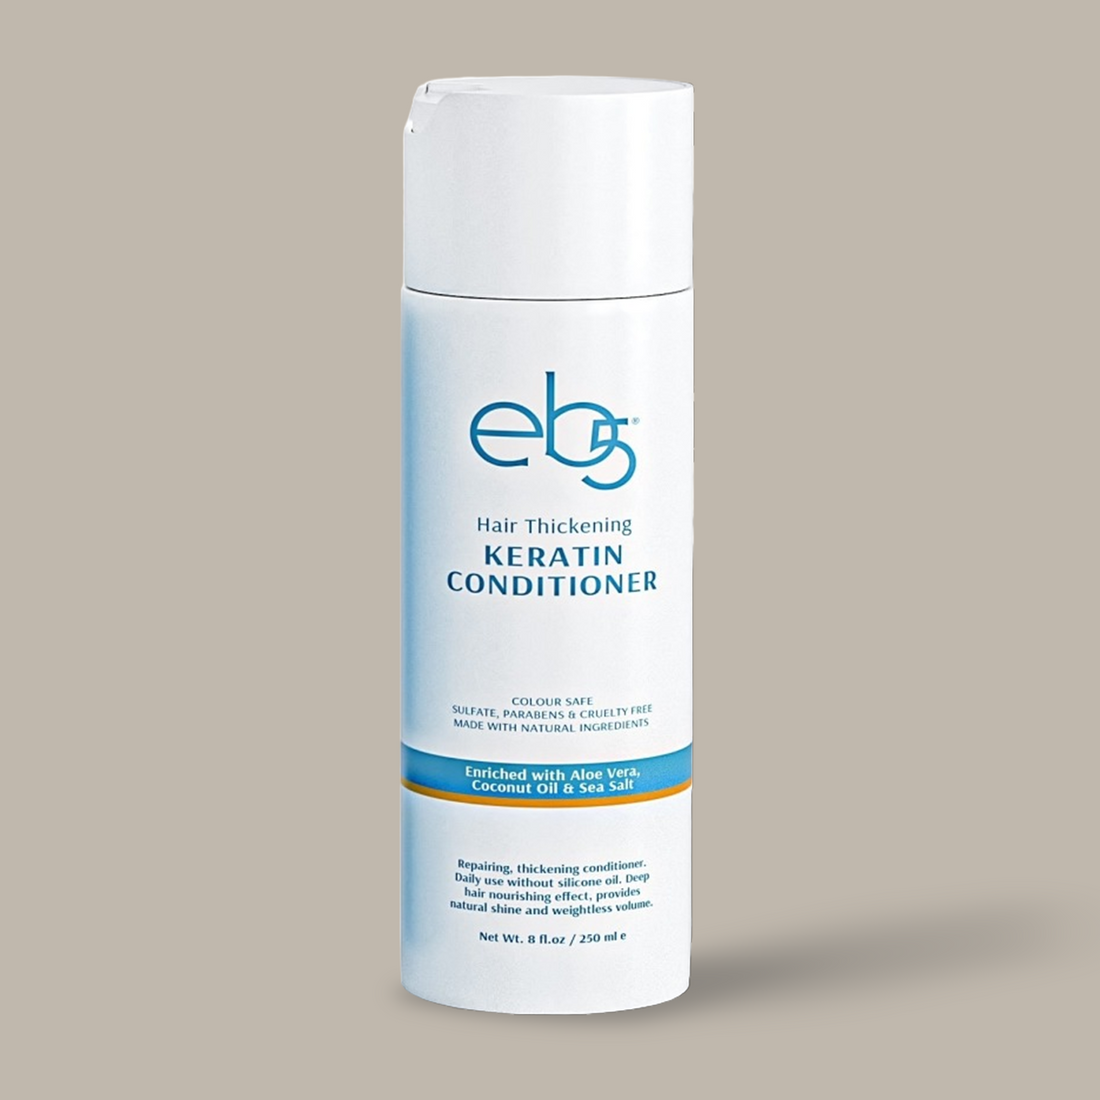 eb5 Anti-aging Keratin Hair Conditioner